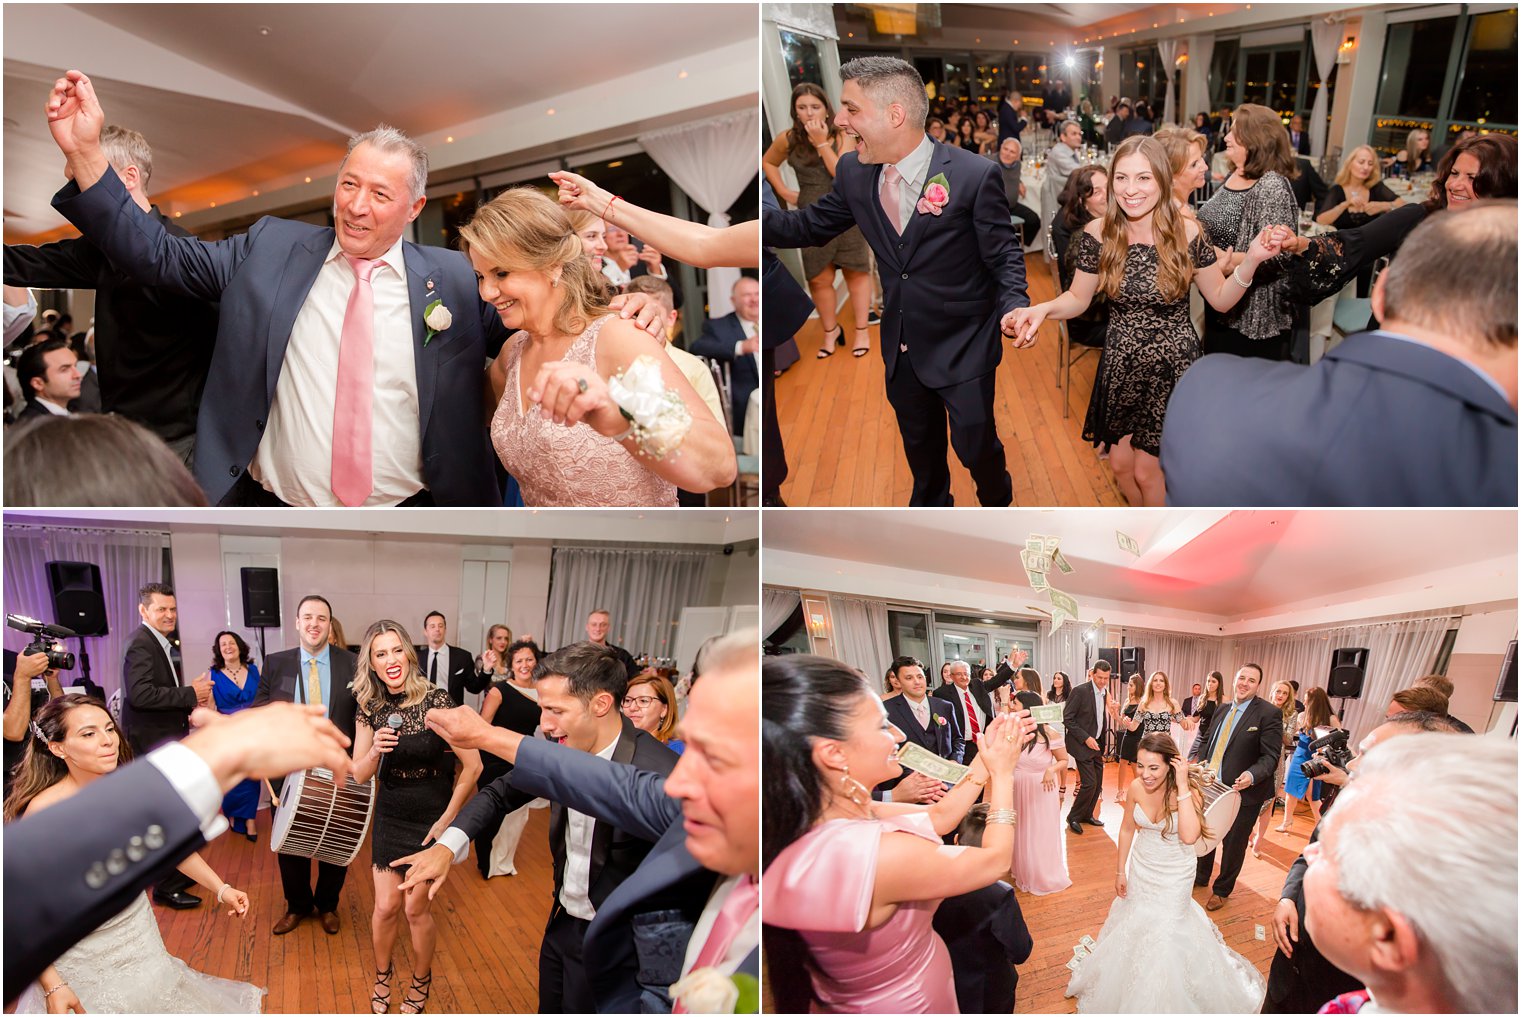 Albanian wedding reception dancing at Battery Gardens Restaurant | Photo by Idalia Photography